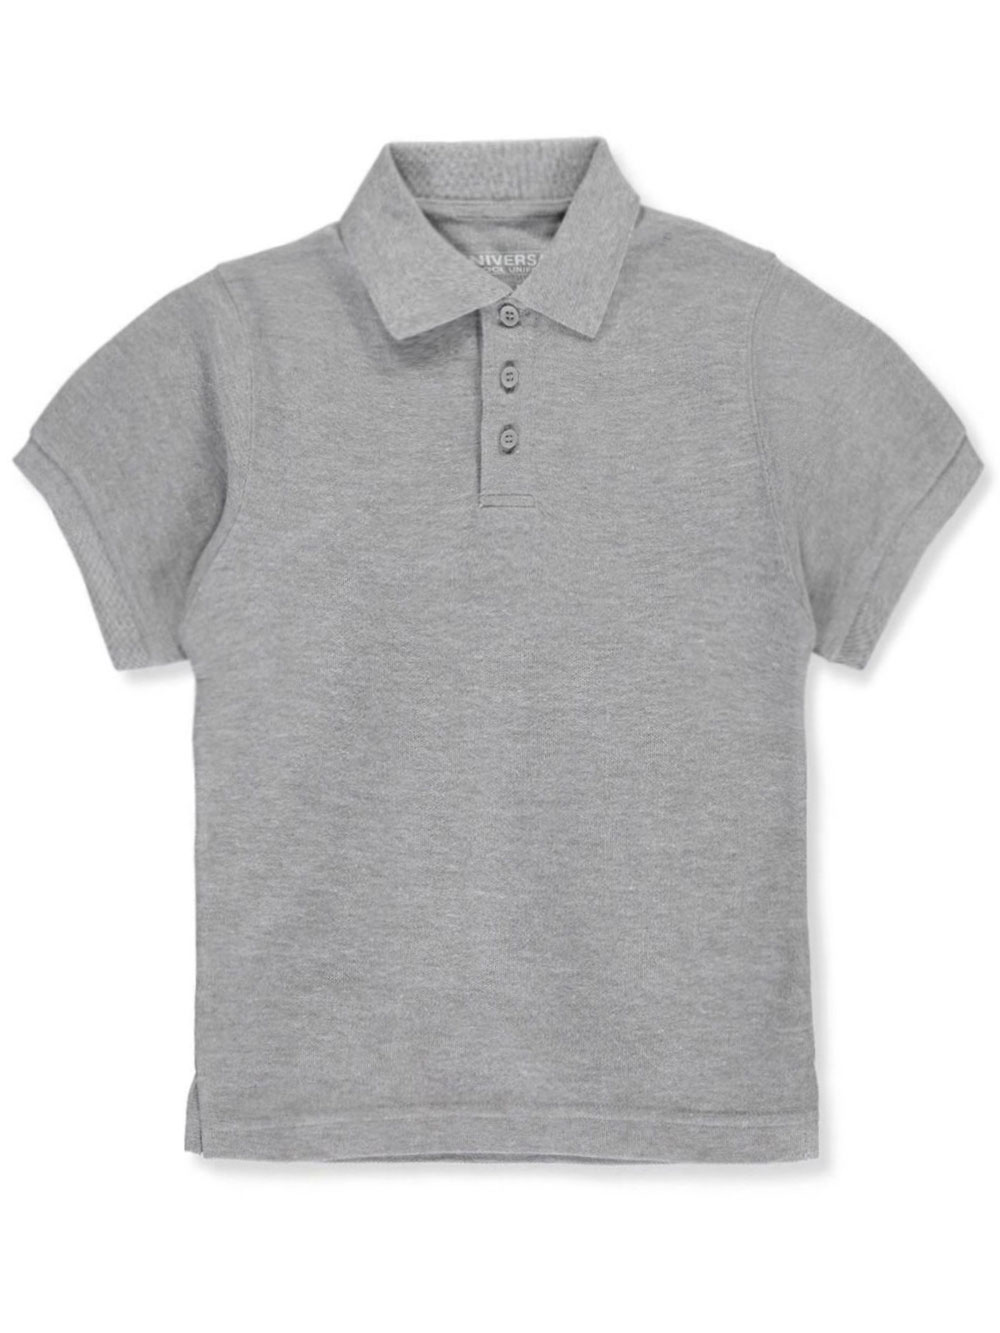 Universal Studios Unisex Boys Girls Short Sleeve Pique Polo Shirt w/Stain Release (2T-20) by Univ- Sku:Staniu838HGR16; Color:HEATHER GREY; Size...